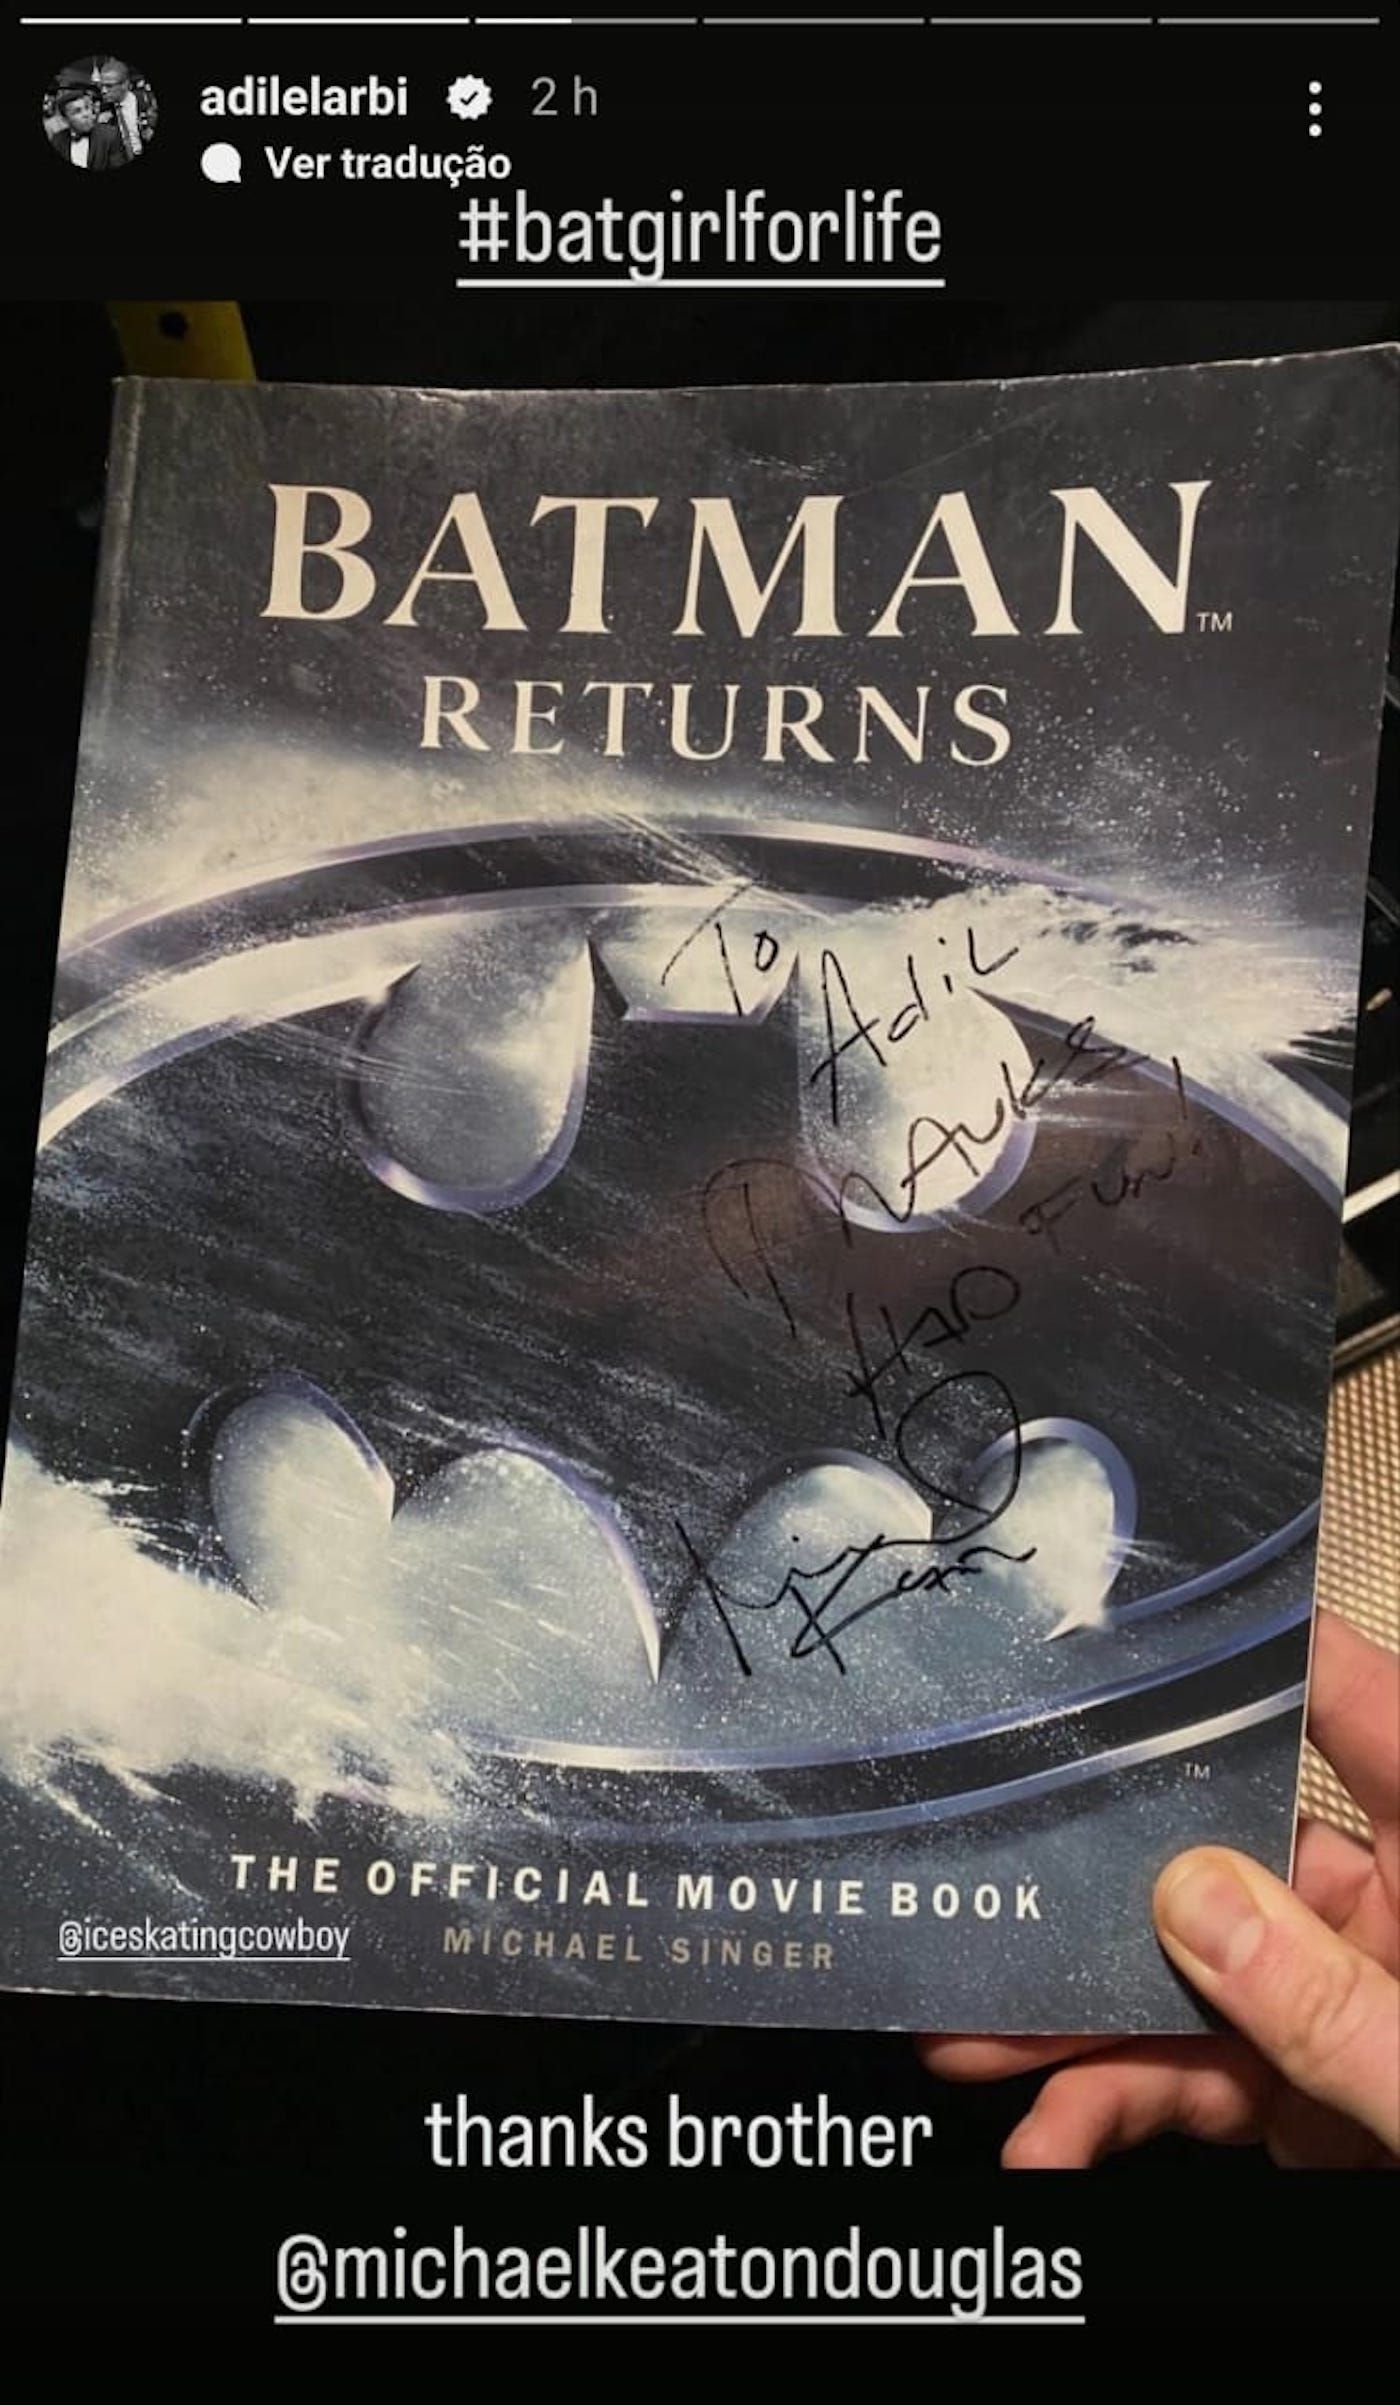 Batgirl Gift of Michael Keaton Signed Book